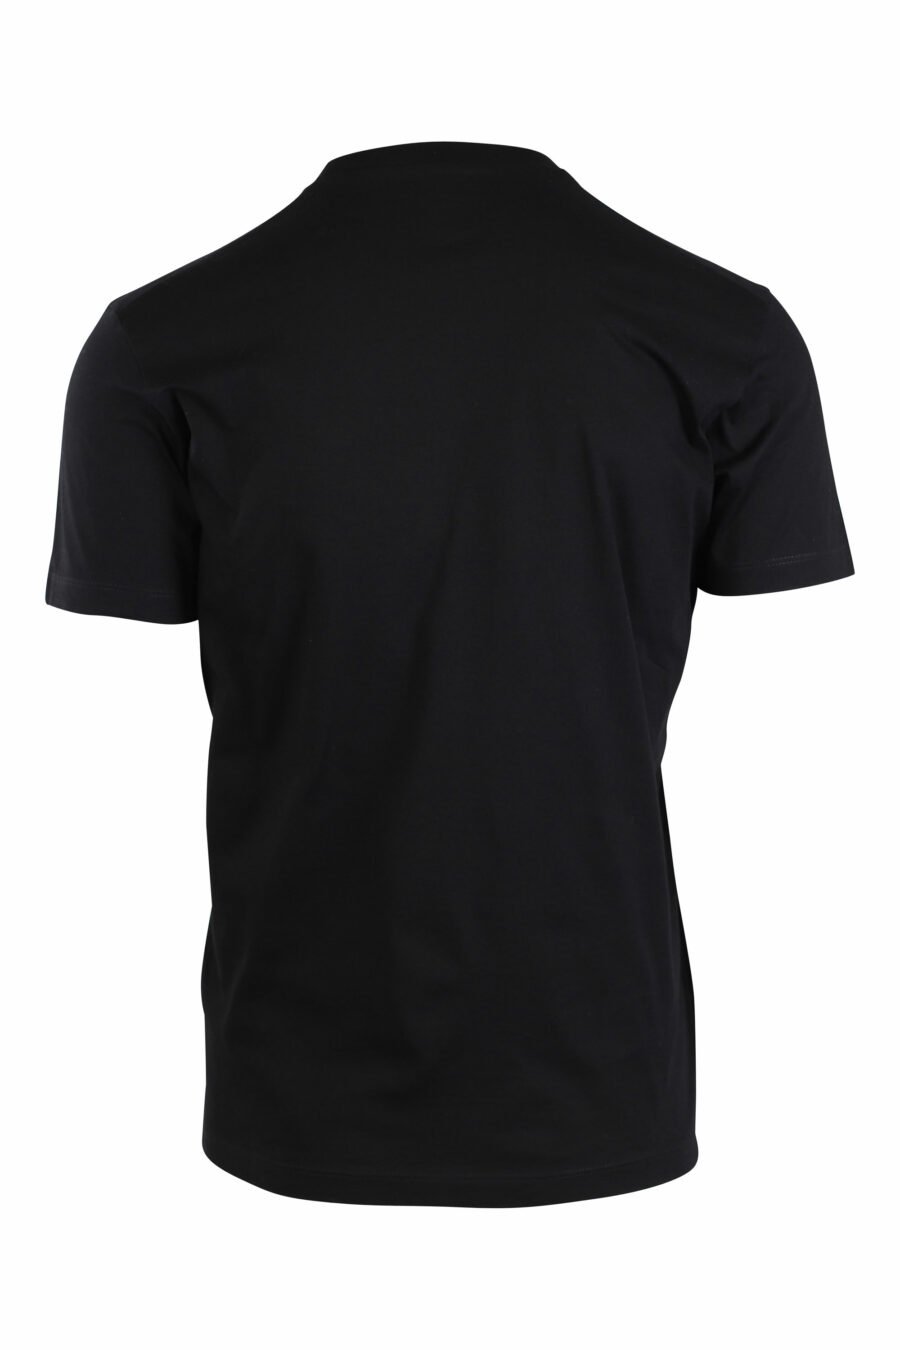 T-shirt black with happy green leaf logo - IMG 2674